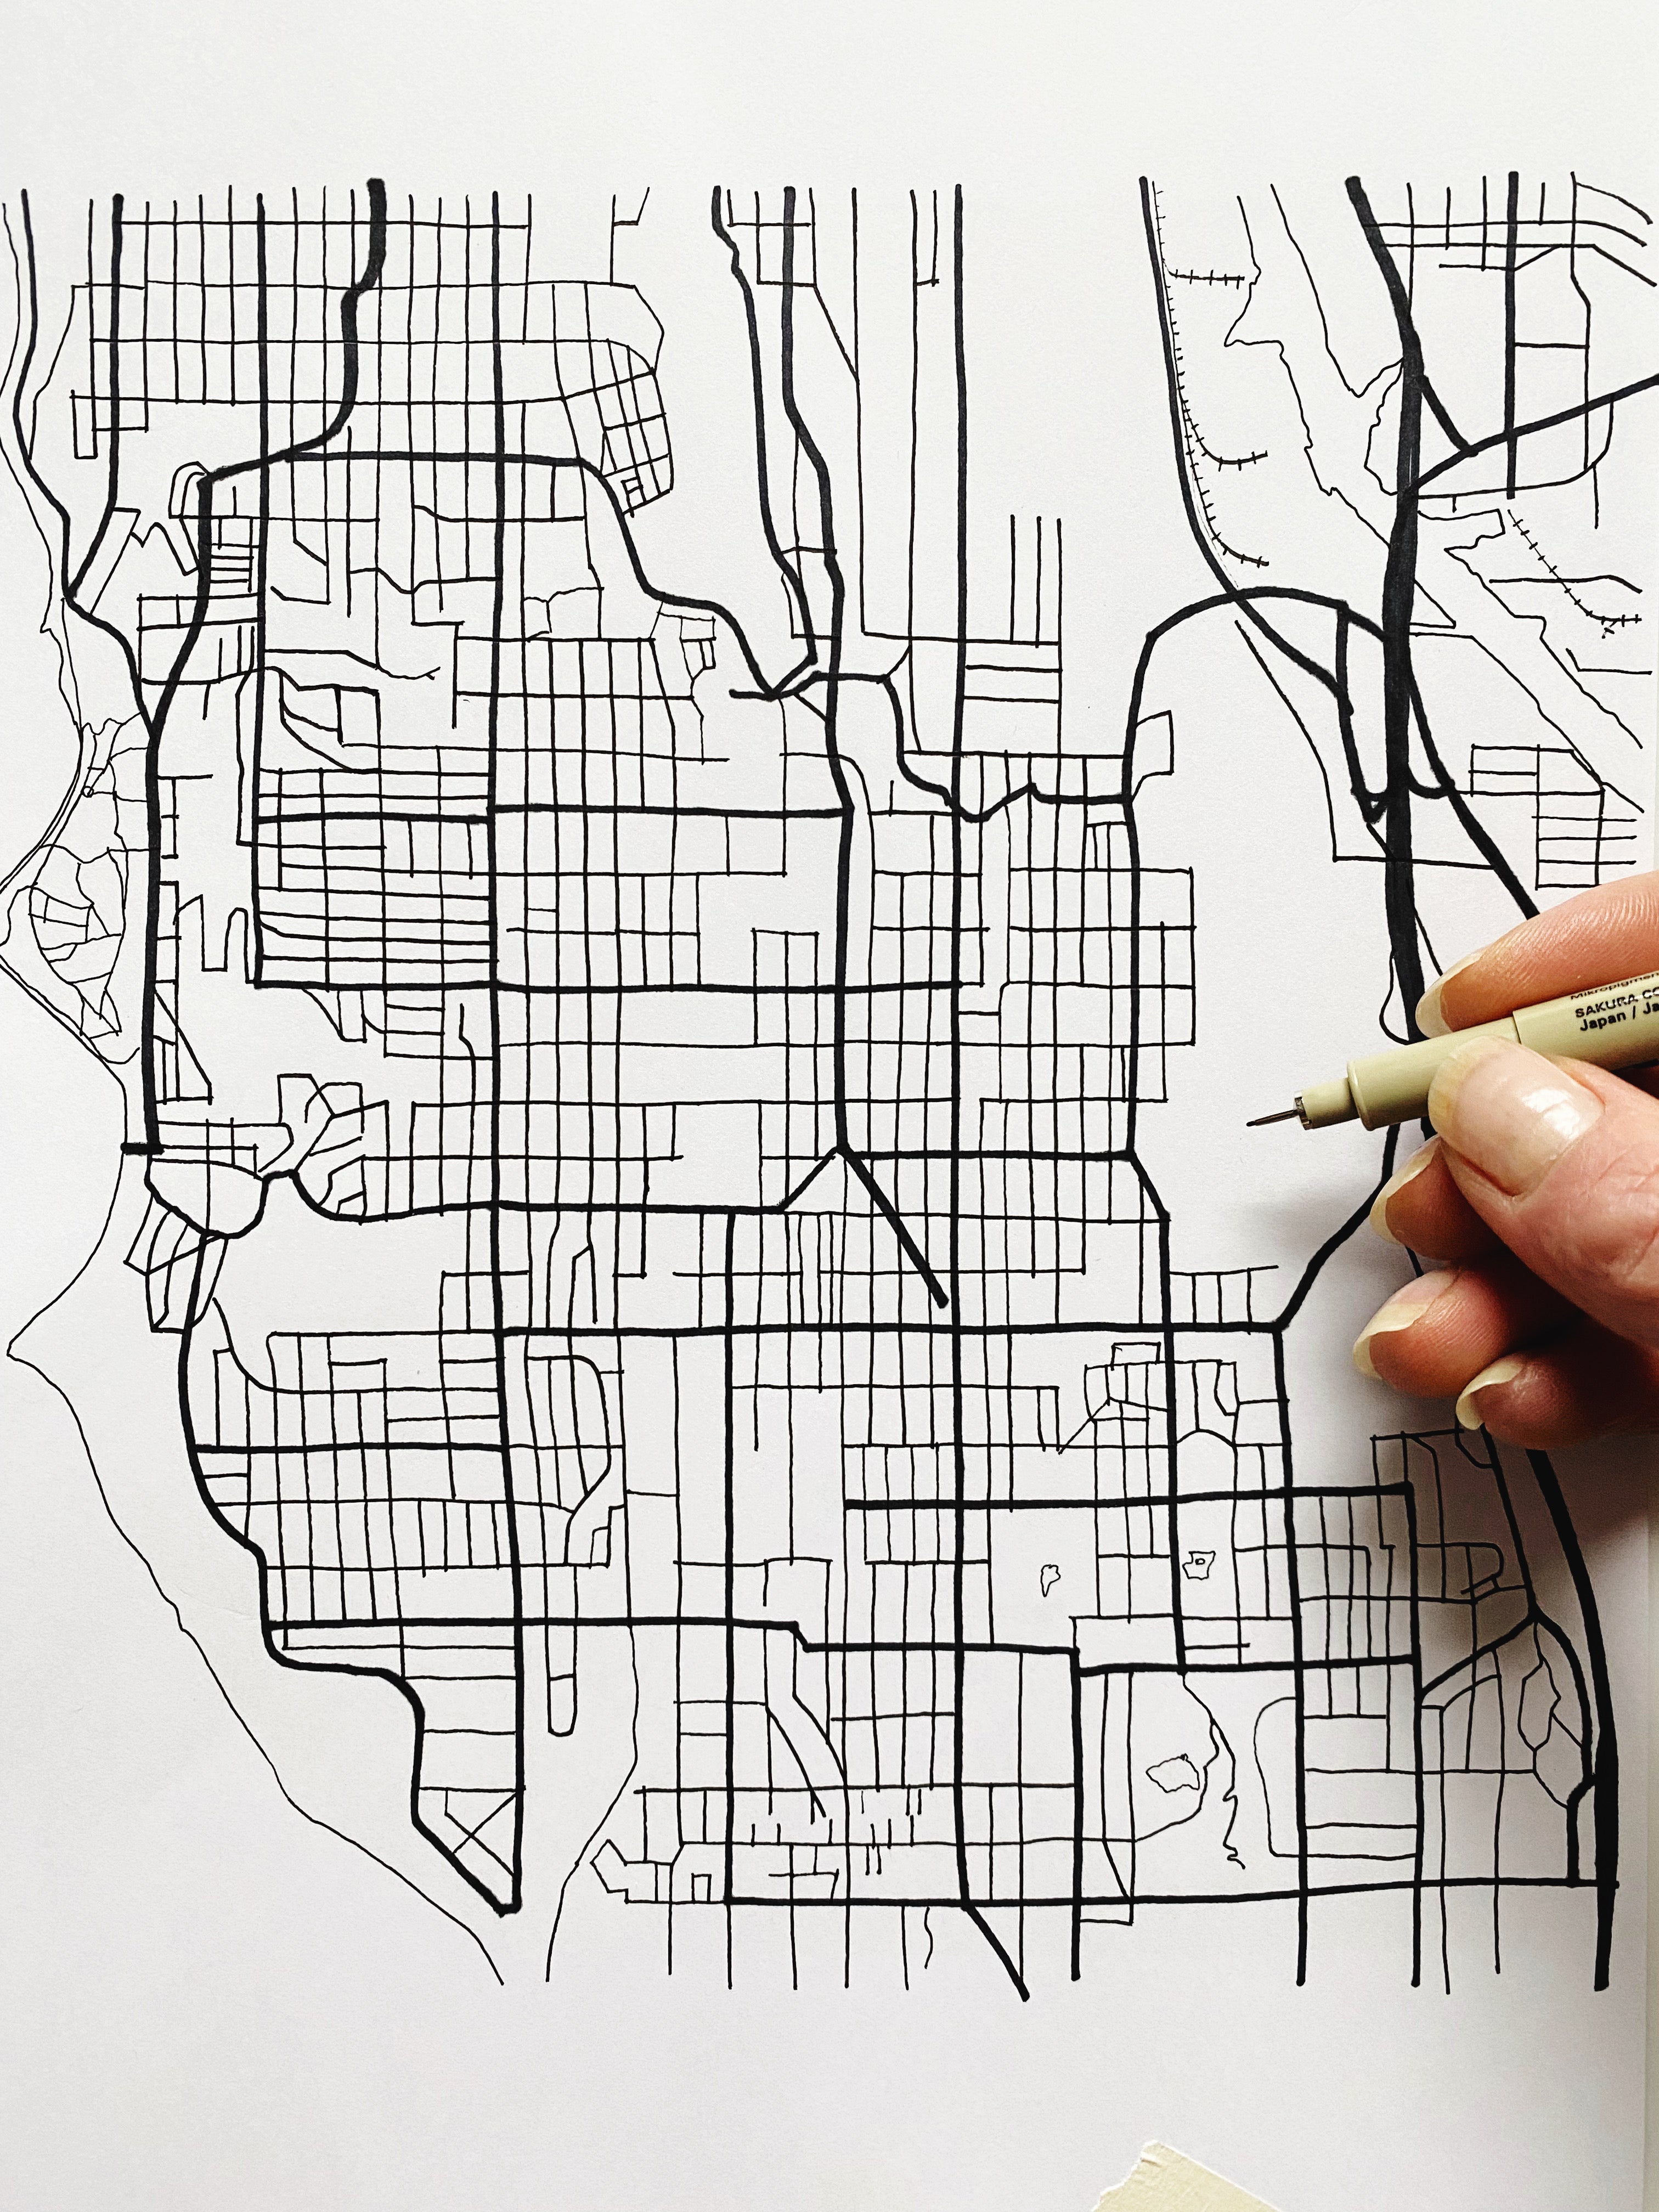 WHITE CENTER West Seattle WA Urban Fabrics City Map: PRINT